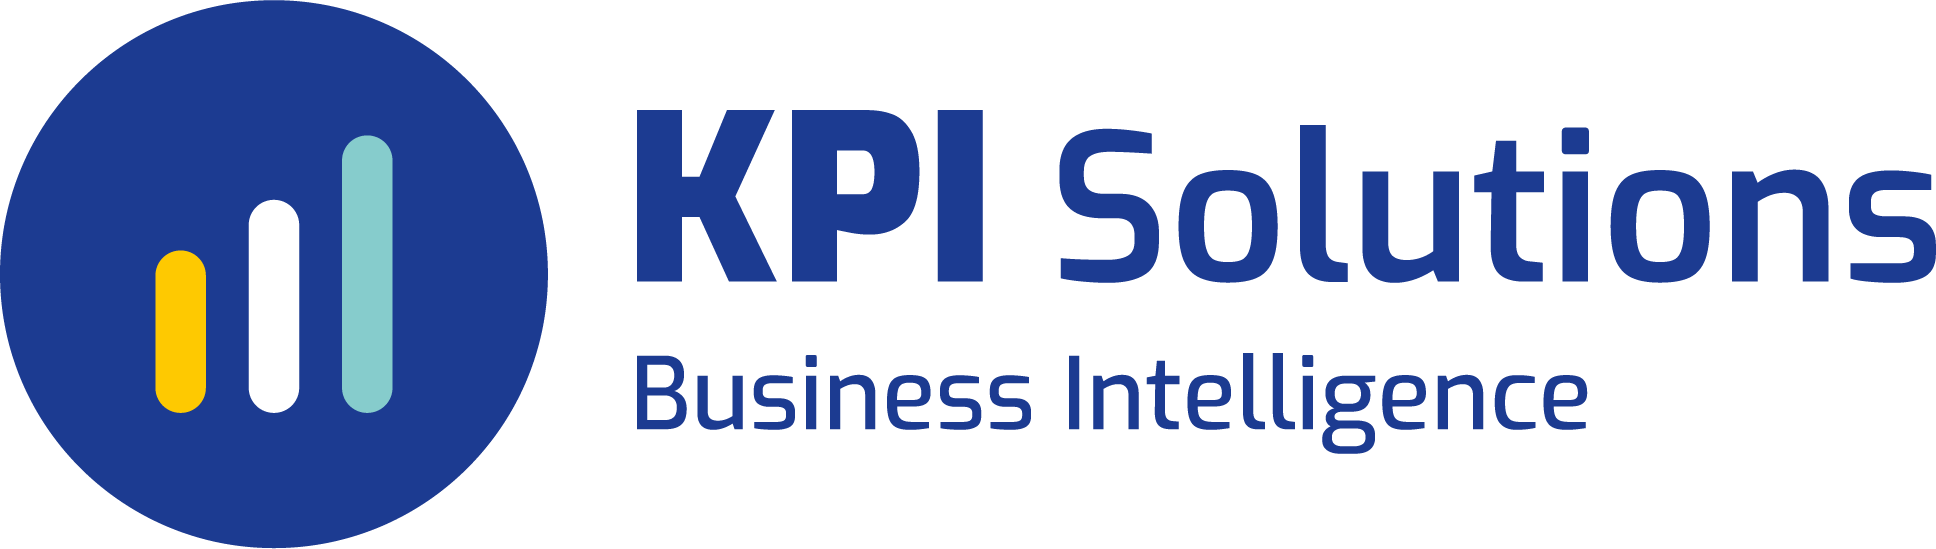 KPI Connector